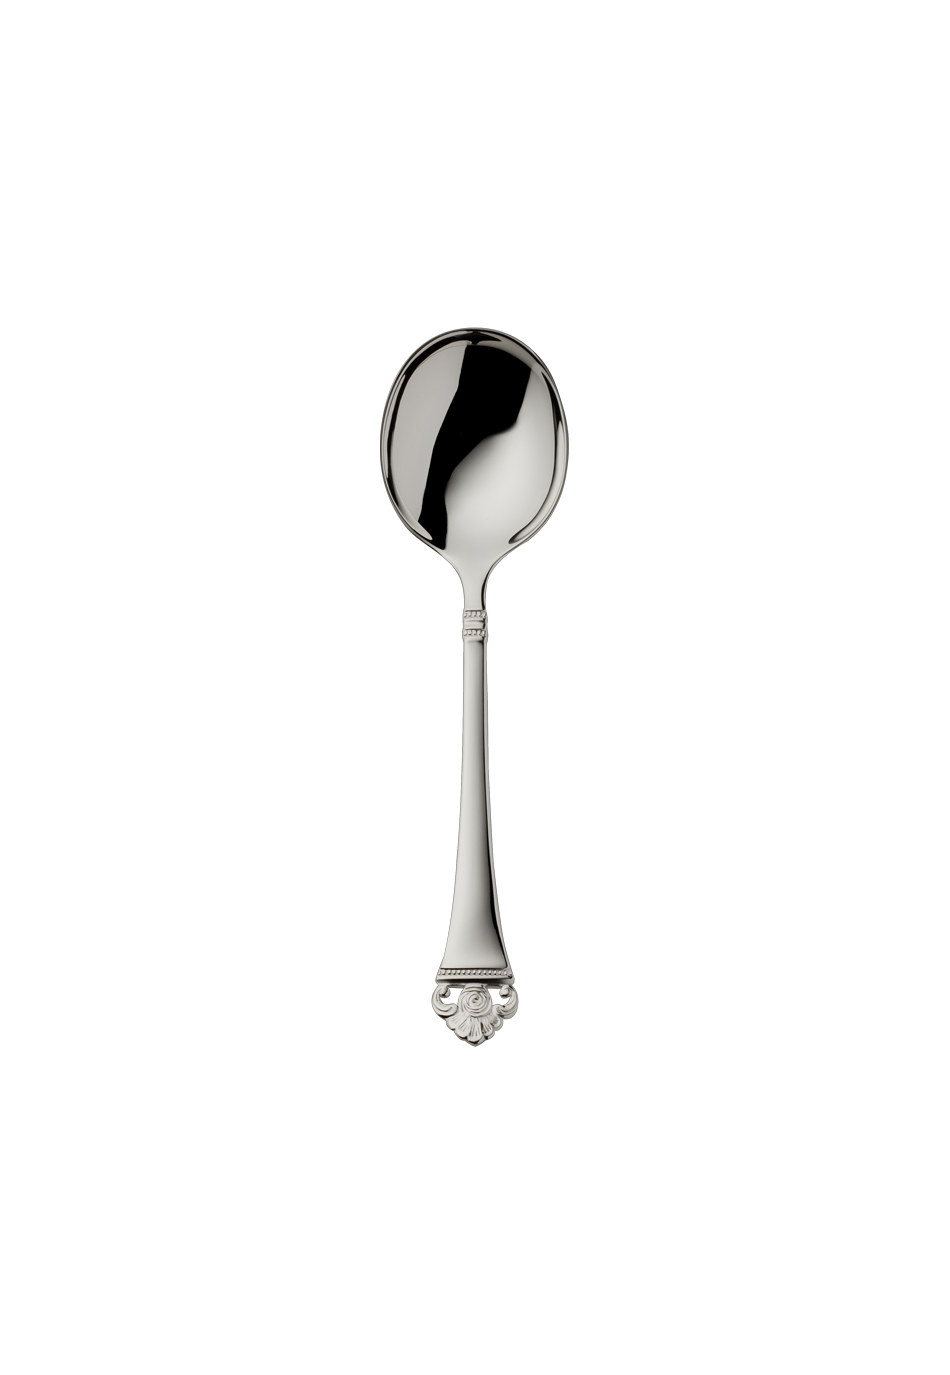 Rosenmuster Cream Spoon (Broth Spoon) (150g massive silverplated)